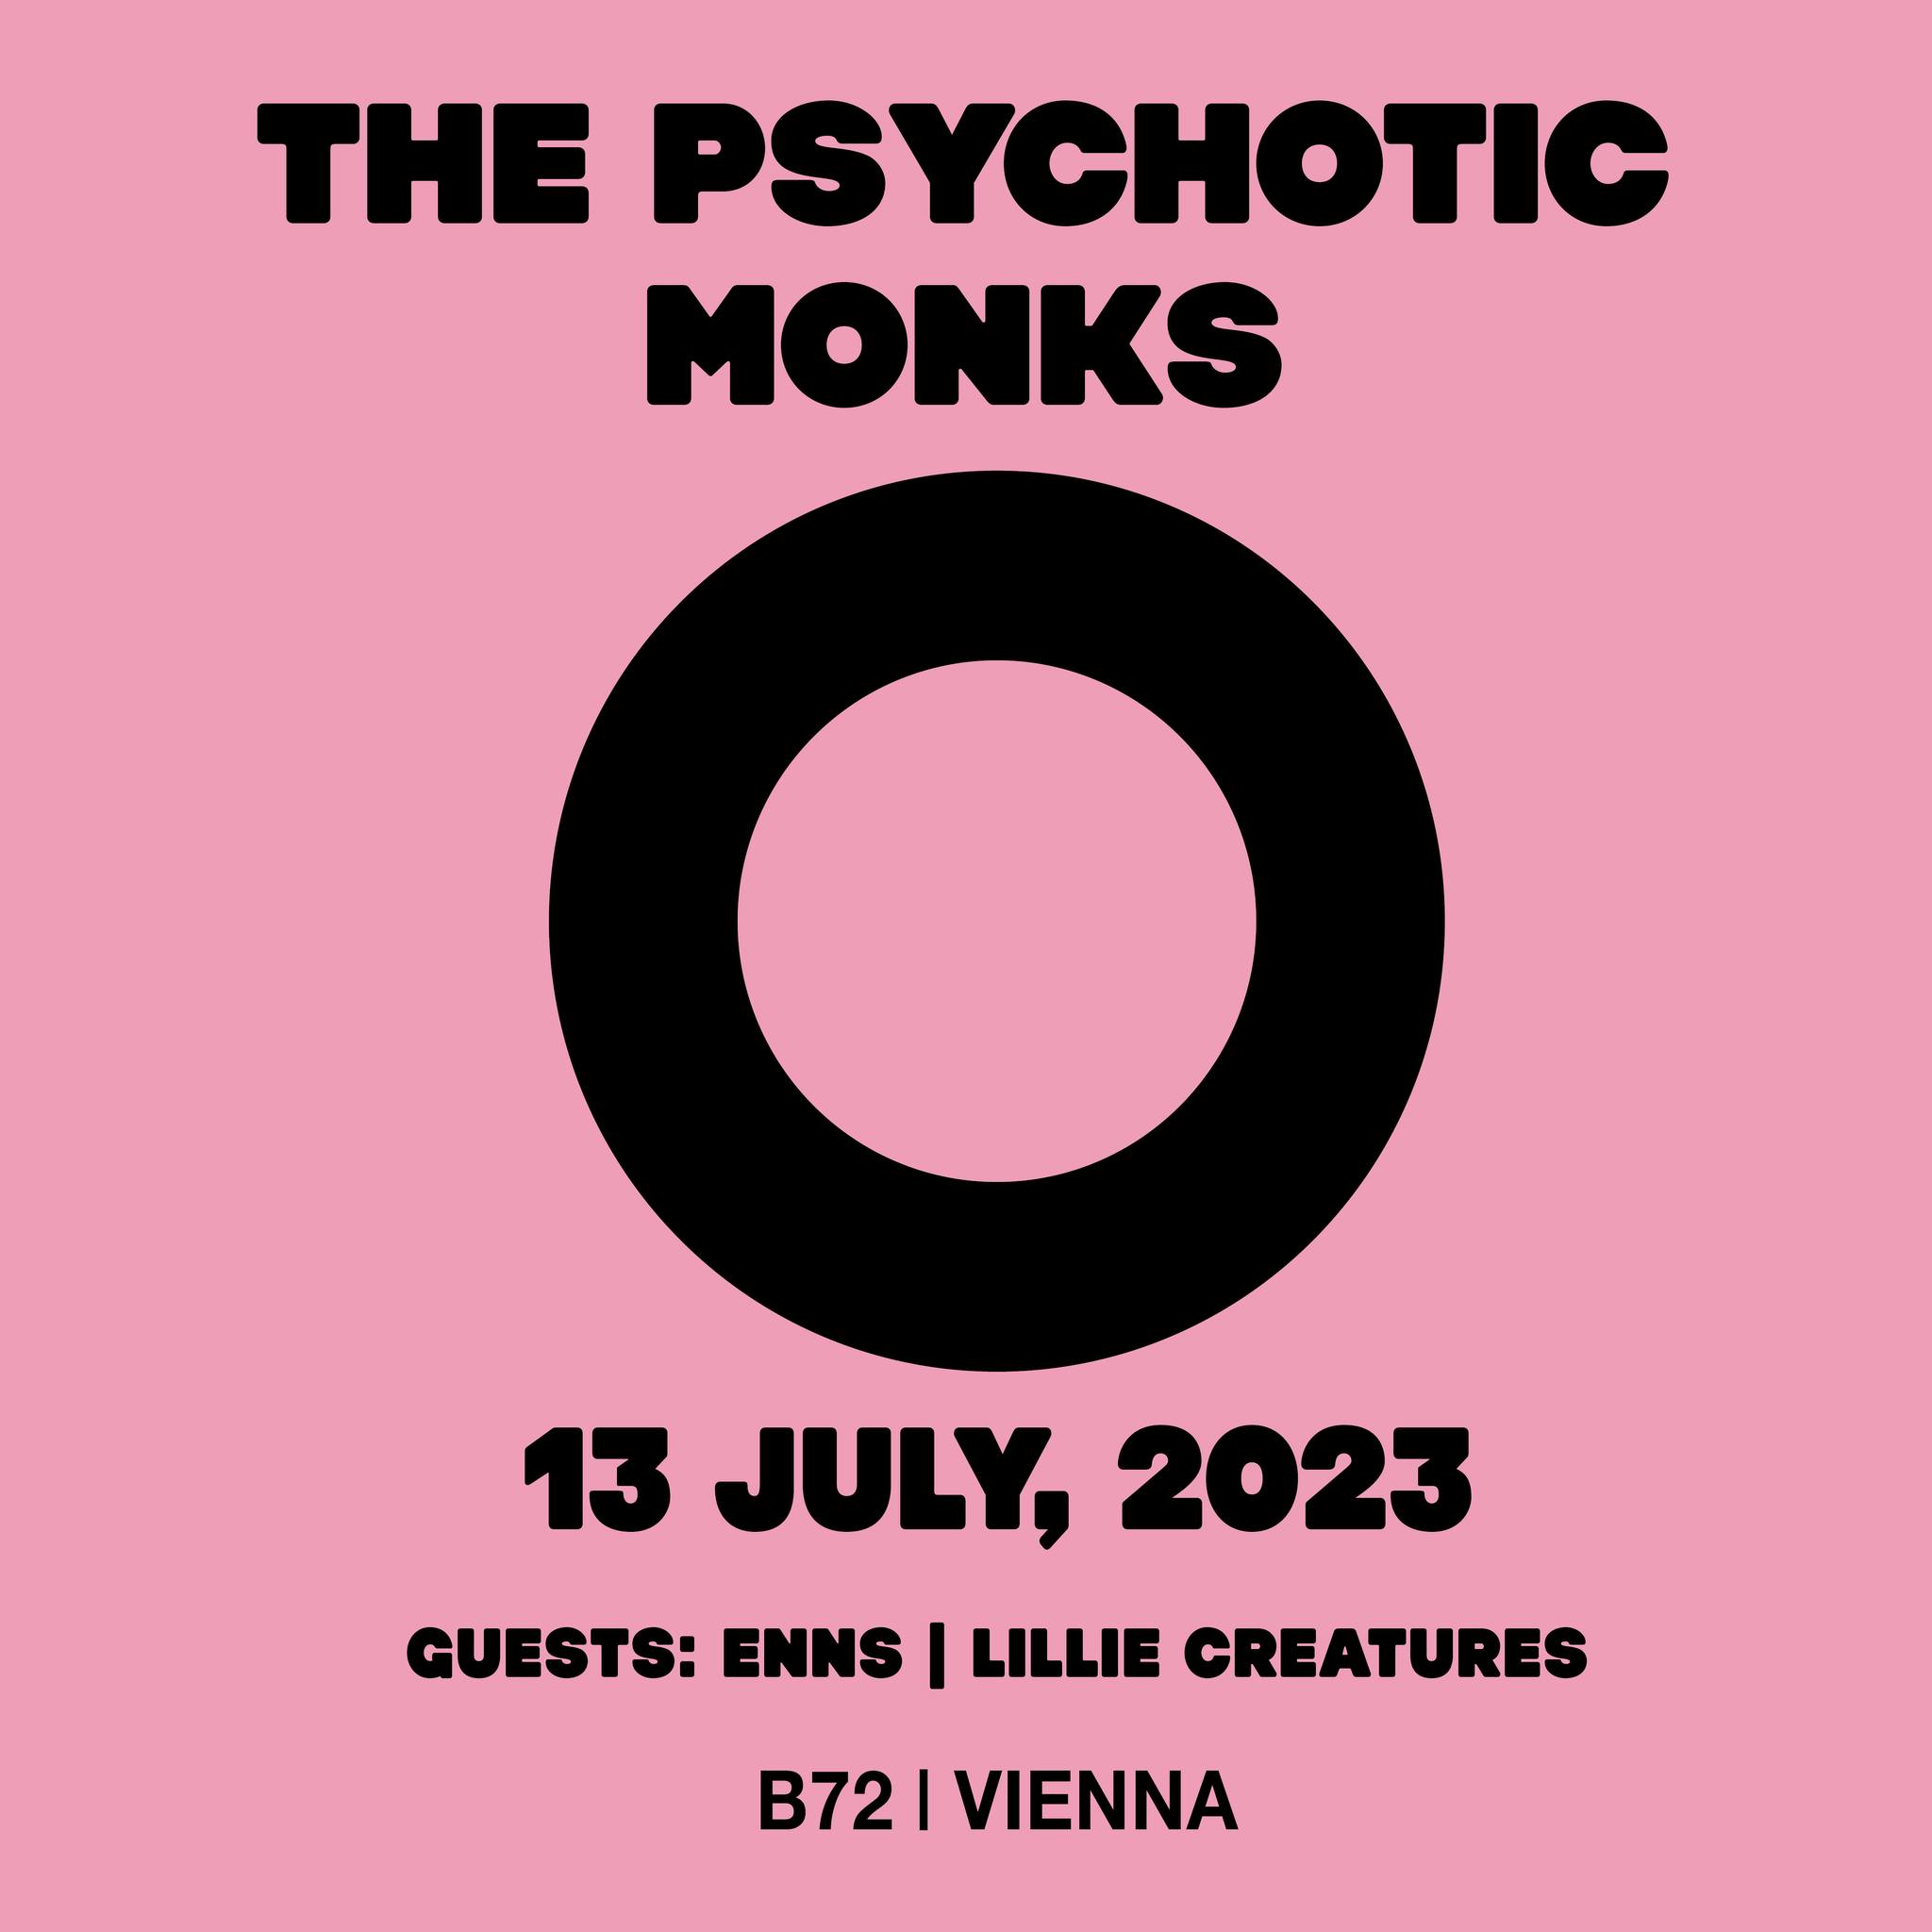 The Psychotic Monks am 13. July 2023 @ B72.